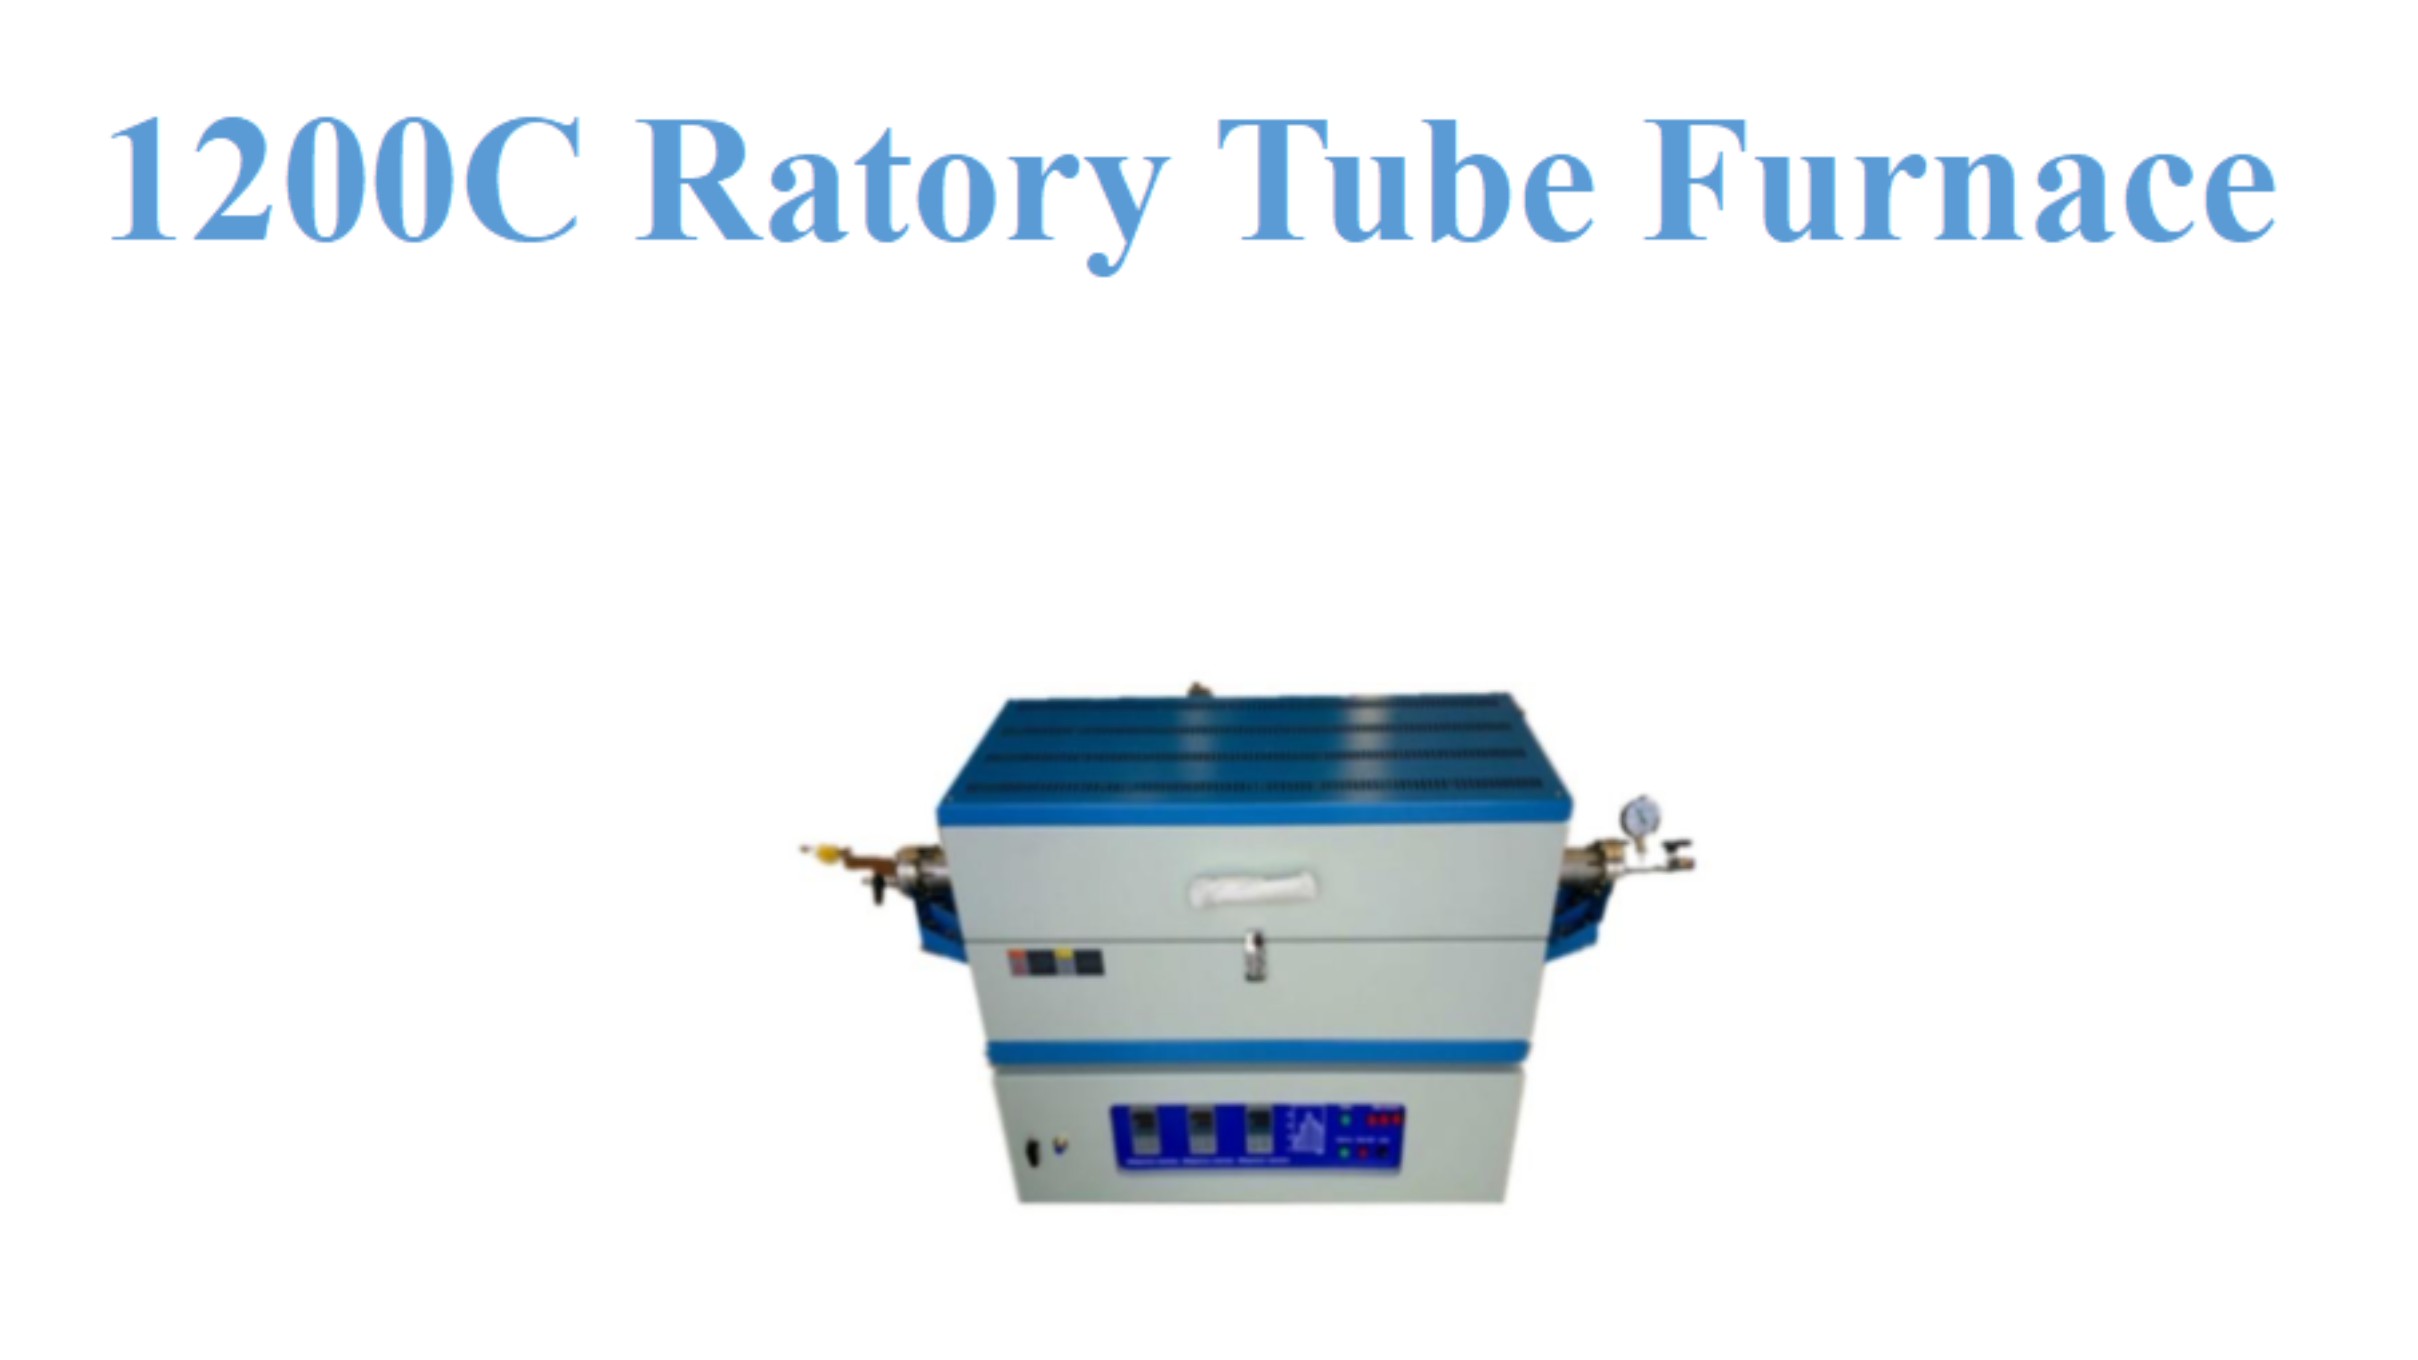 1200C Ratory Tube Furnace